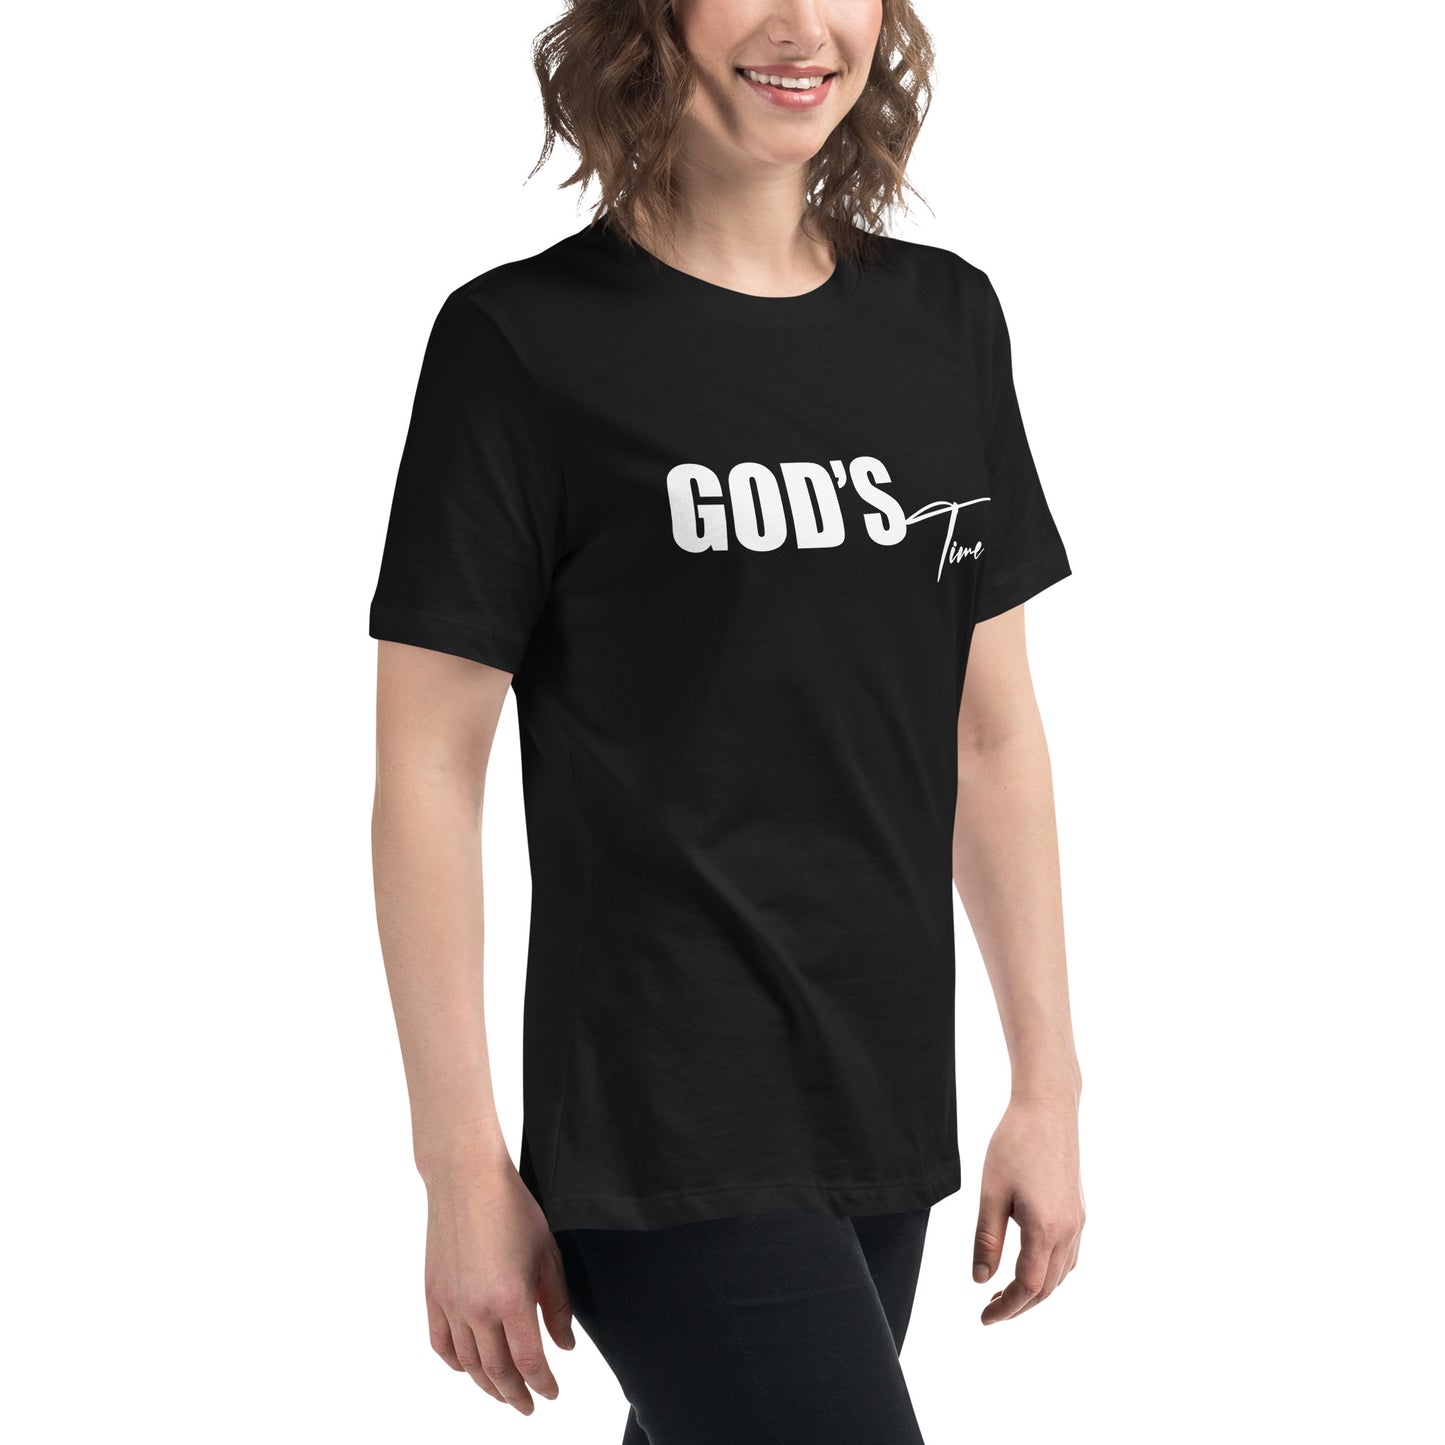 "God's Time" Women's T-Shirt